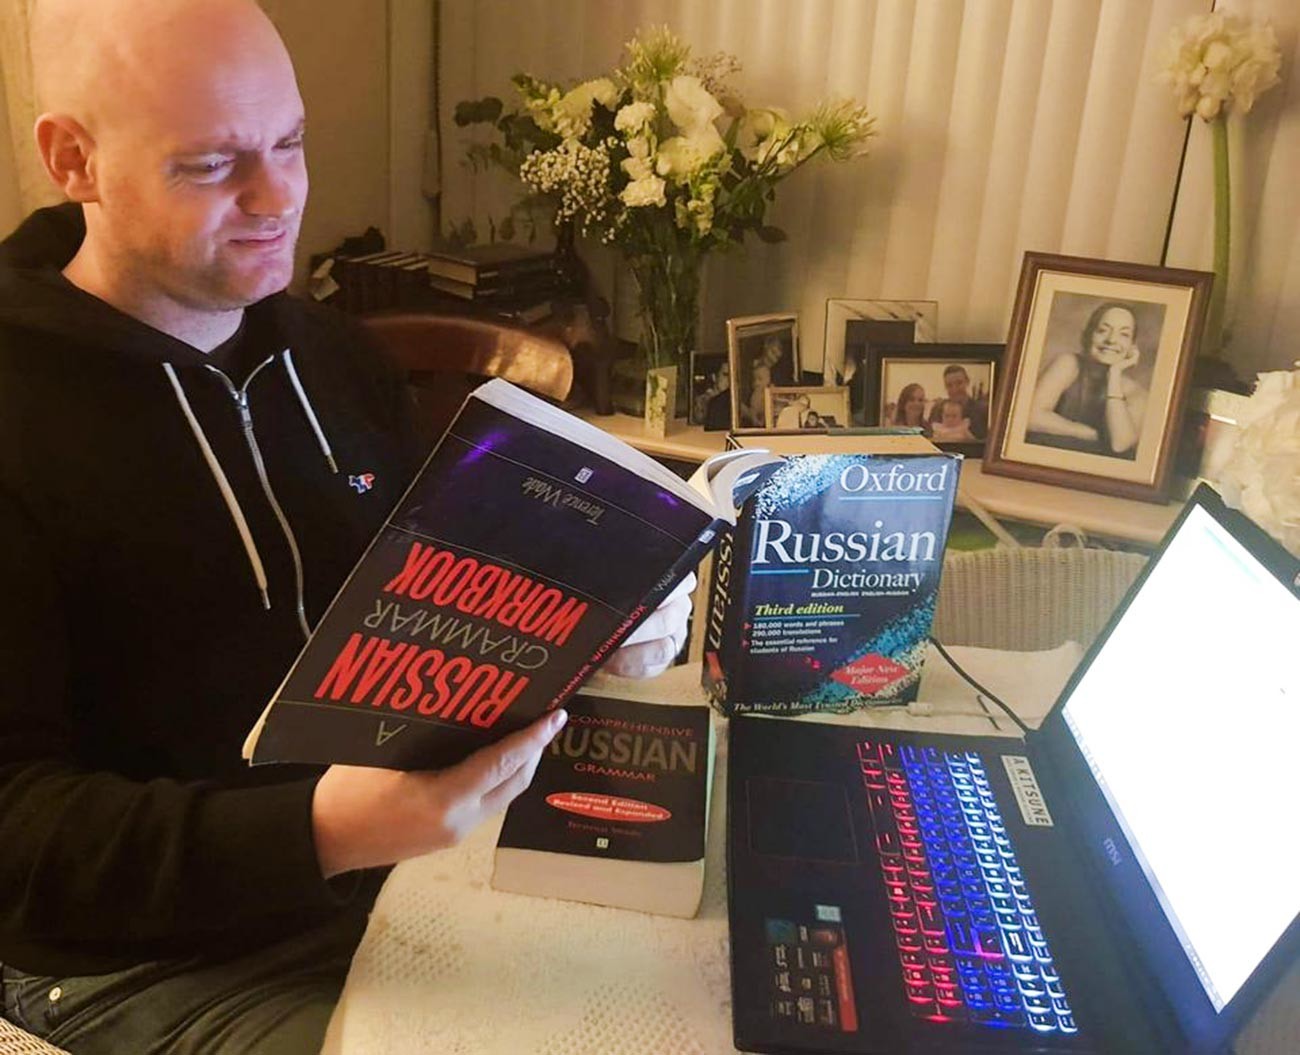 If only 'A Russian grammar workbook' helped to speak fluently...